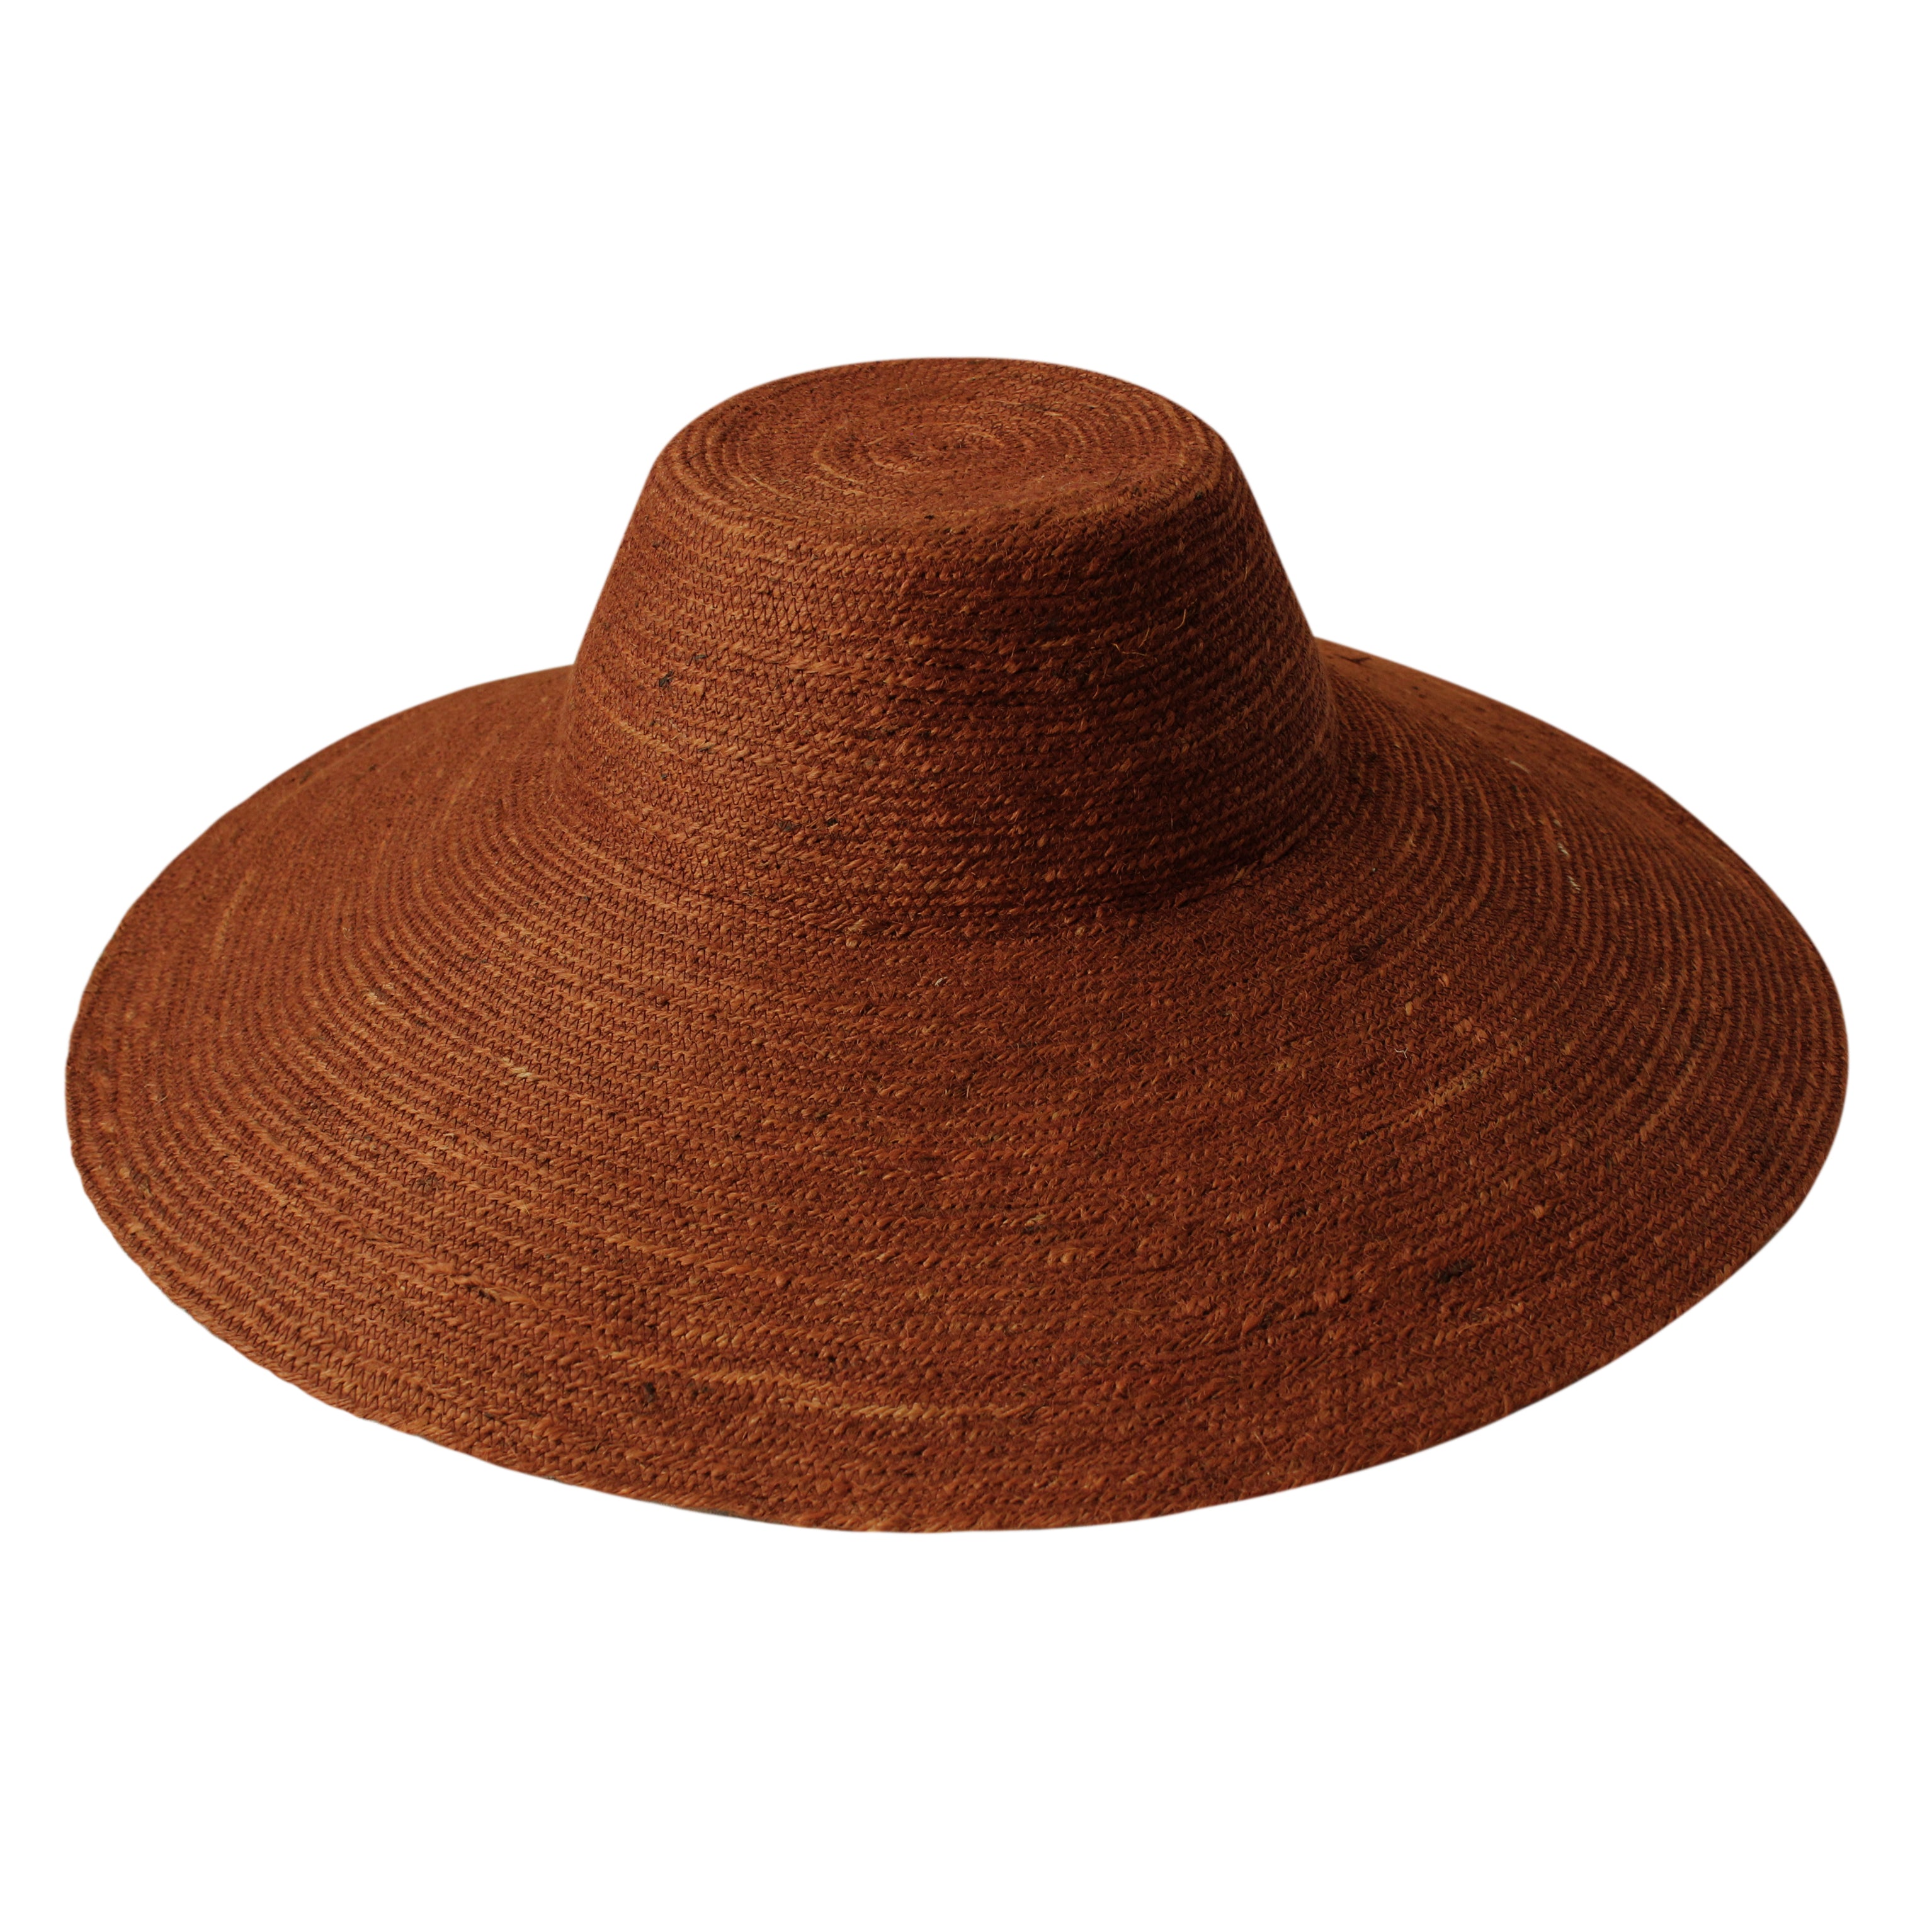 RIRI Jute Straw Hat, in Burnt Sienna